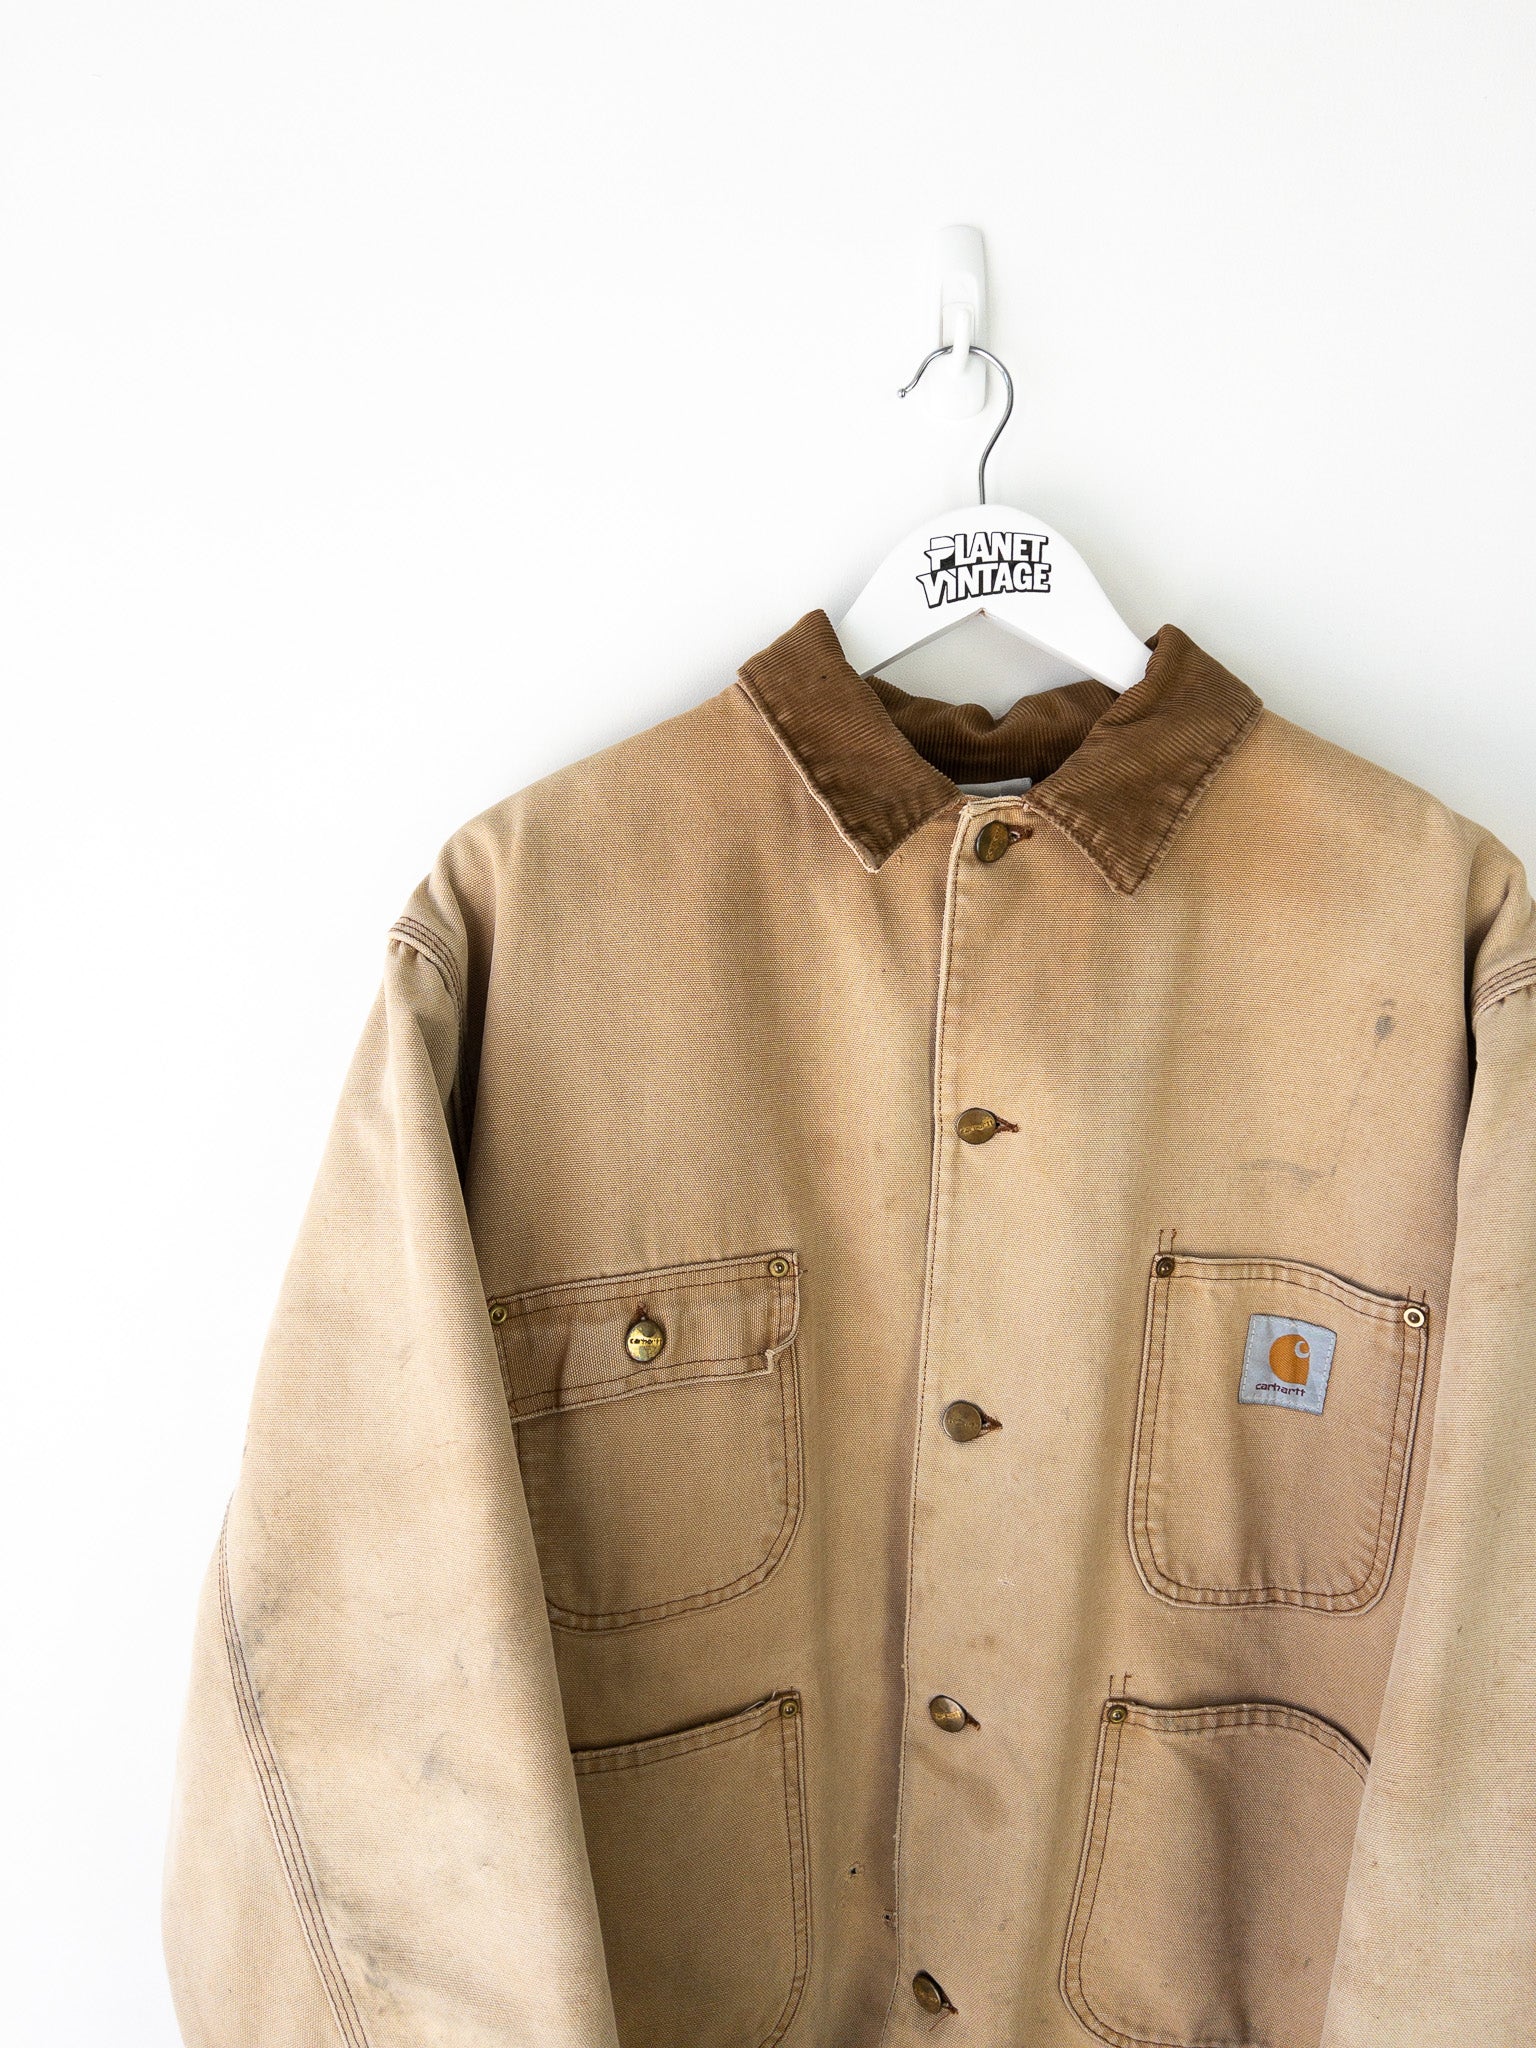 Vintage Carhartt Workwear Jacket (L)